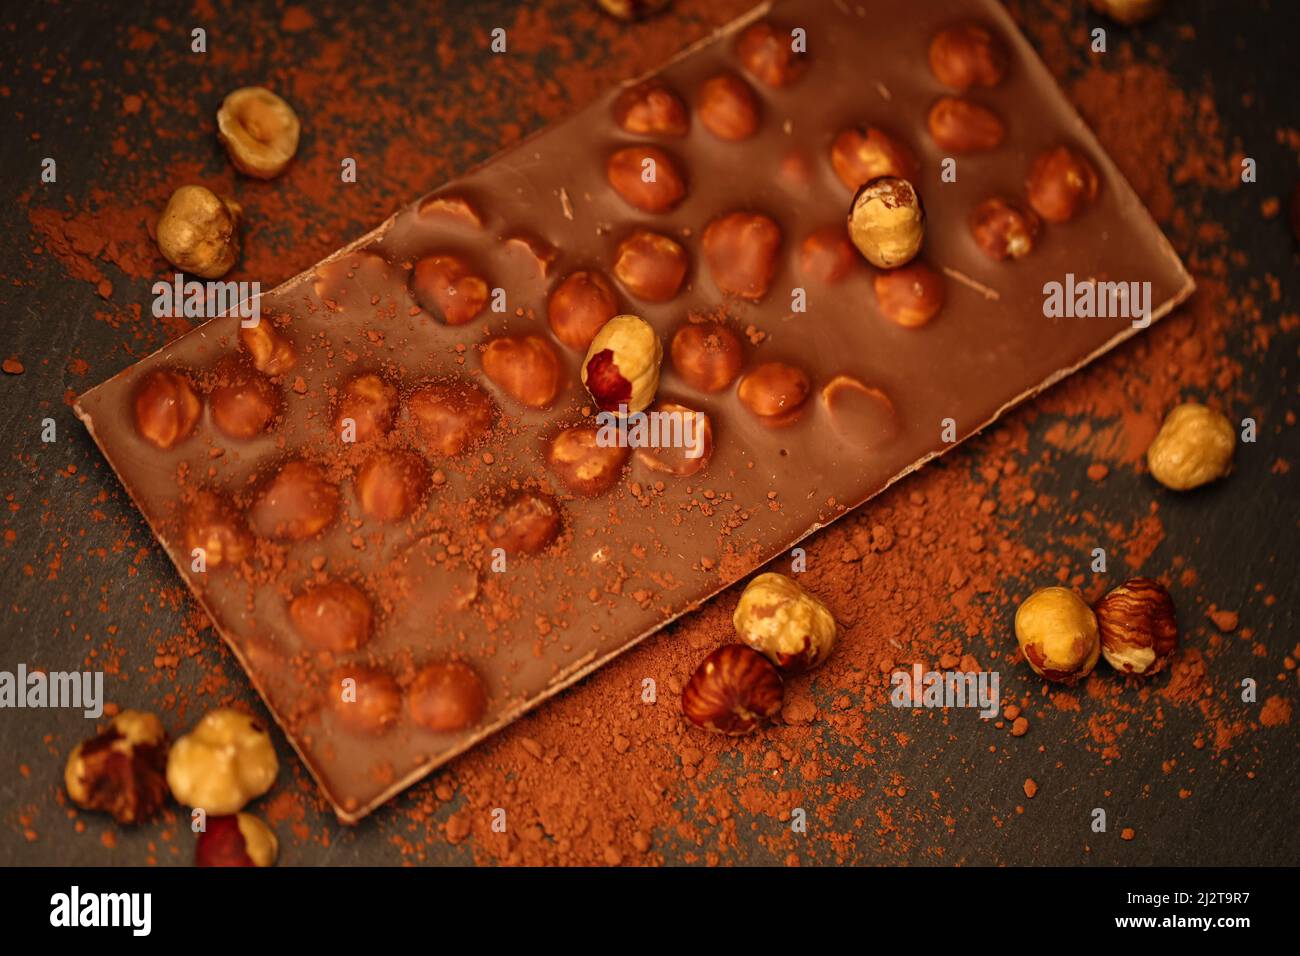 Chocolate bar.Chocolate with hazelnuts and cocoa powder on a slate background.Chocolate dessert with nuts.Bar of chocolate .Desserts and sweets Stock Photo